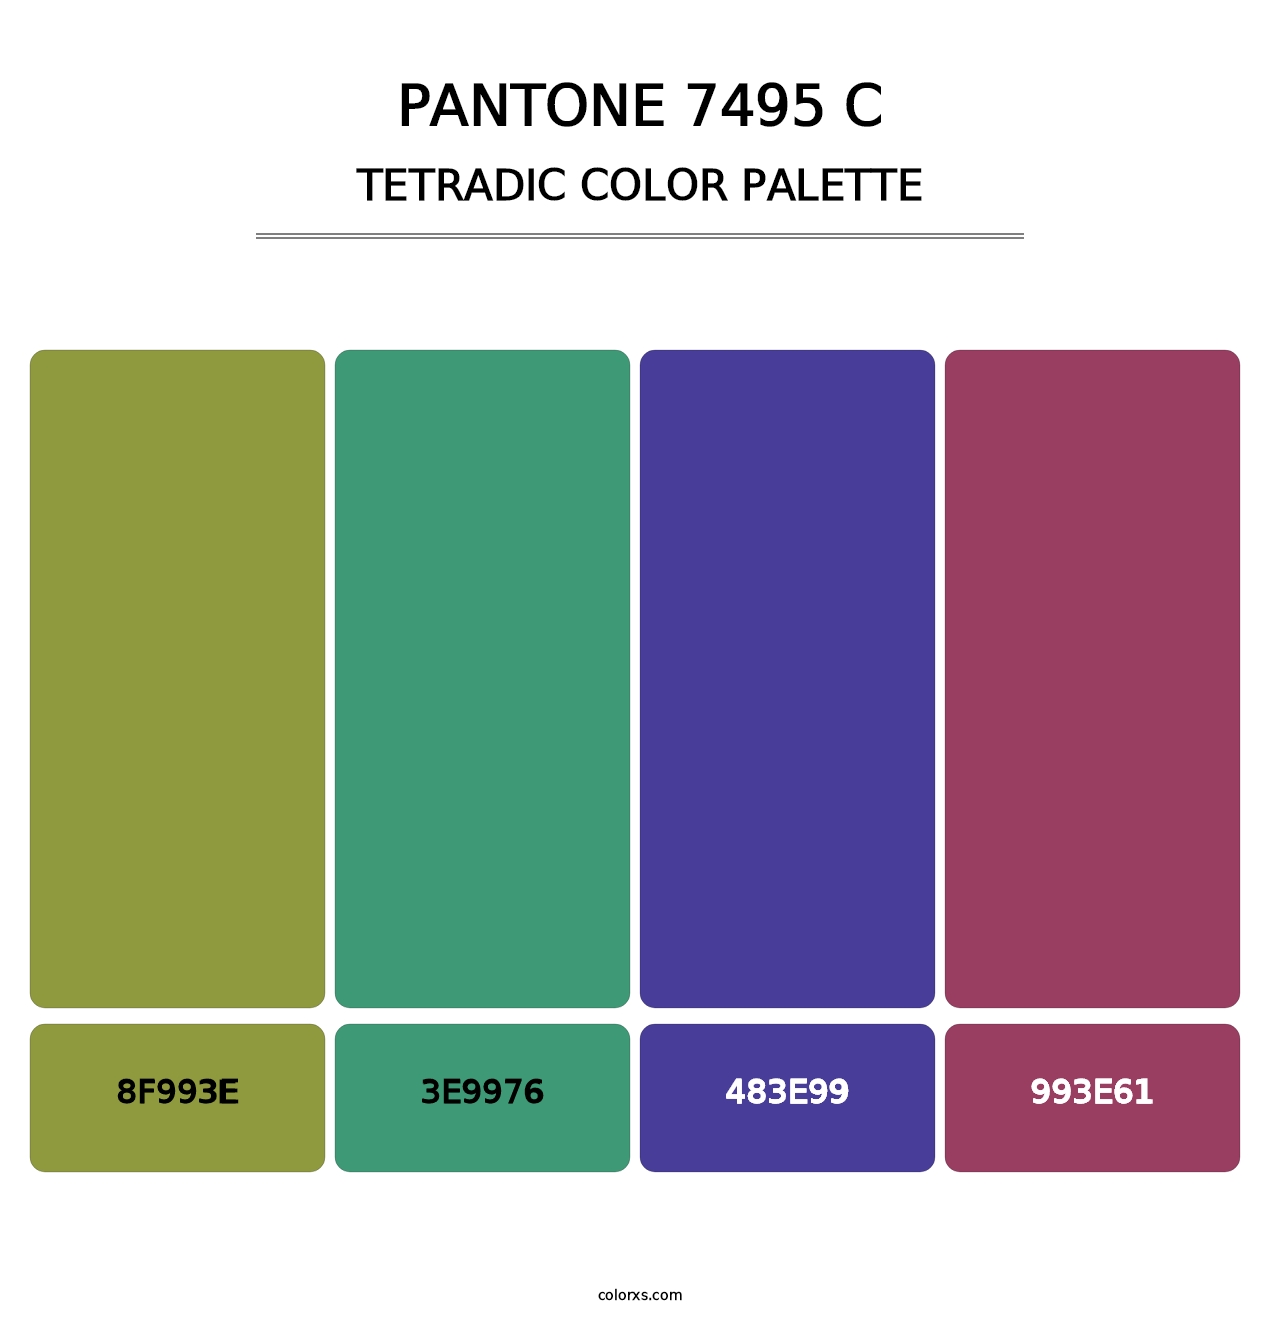 PANTONE 7495 C - Tetradic Color Palette